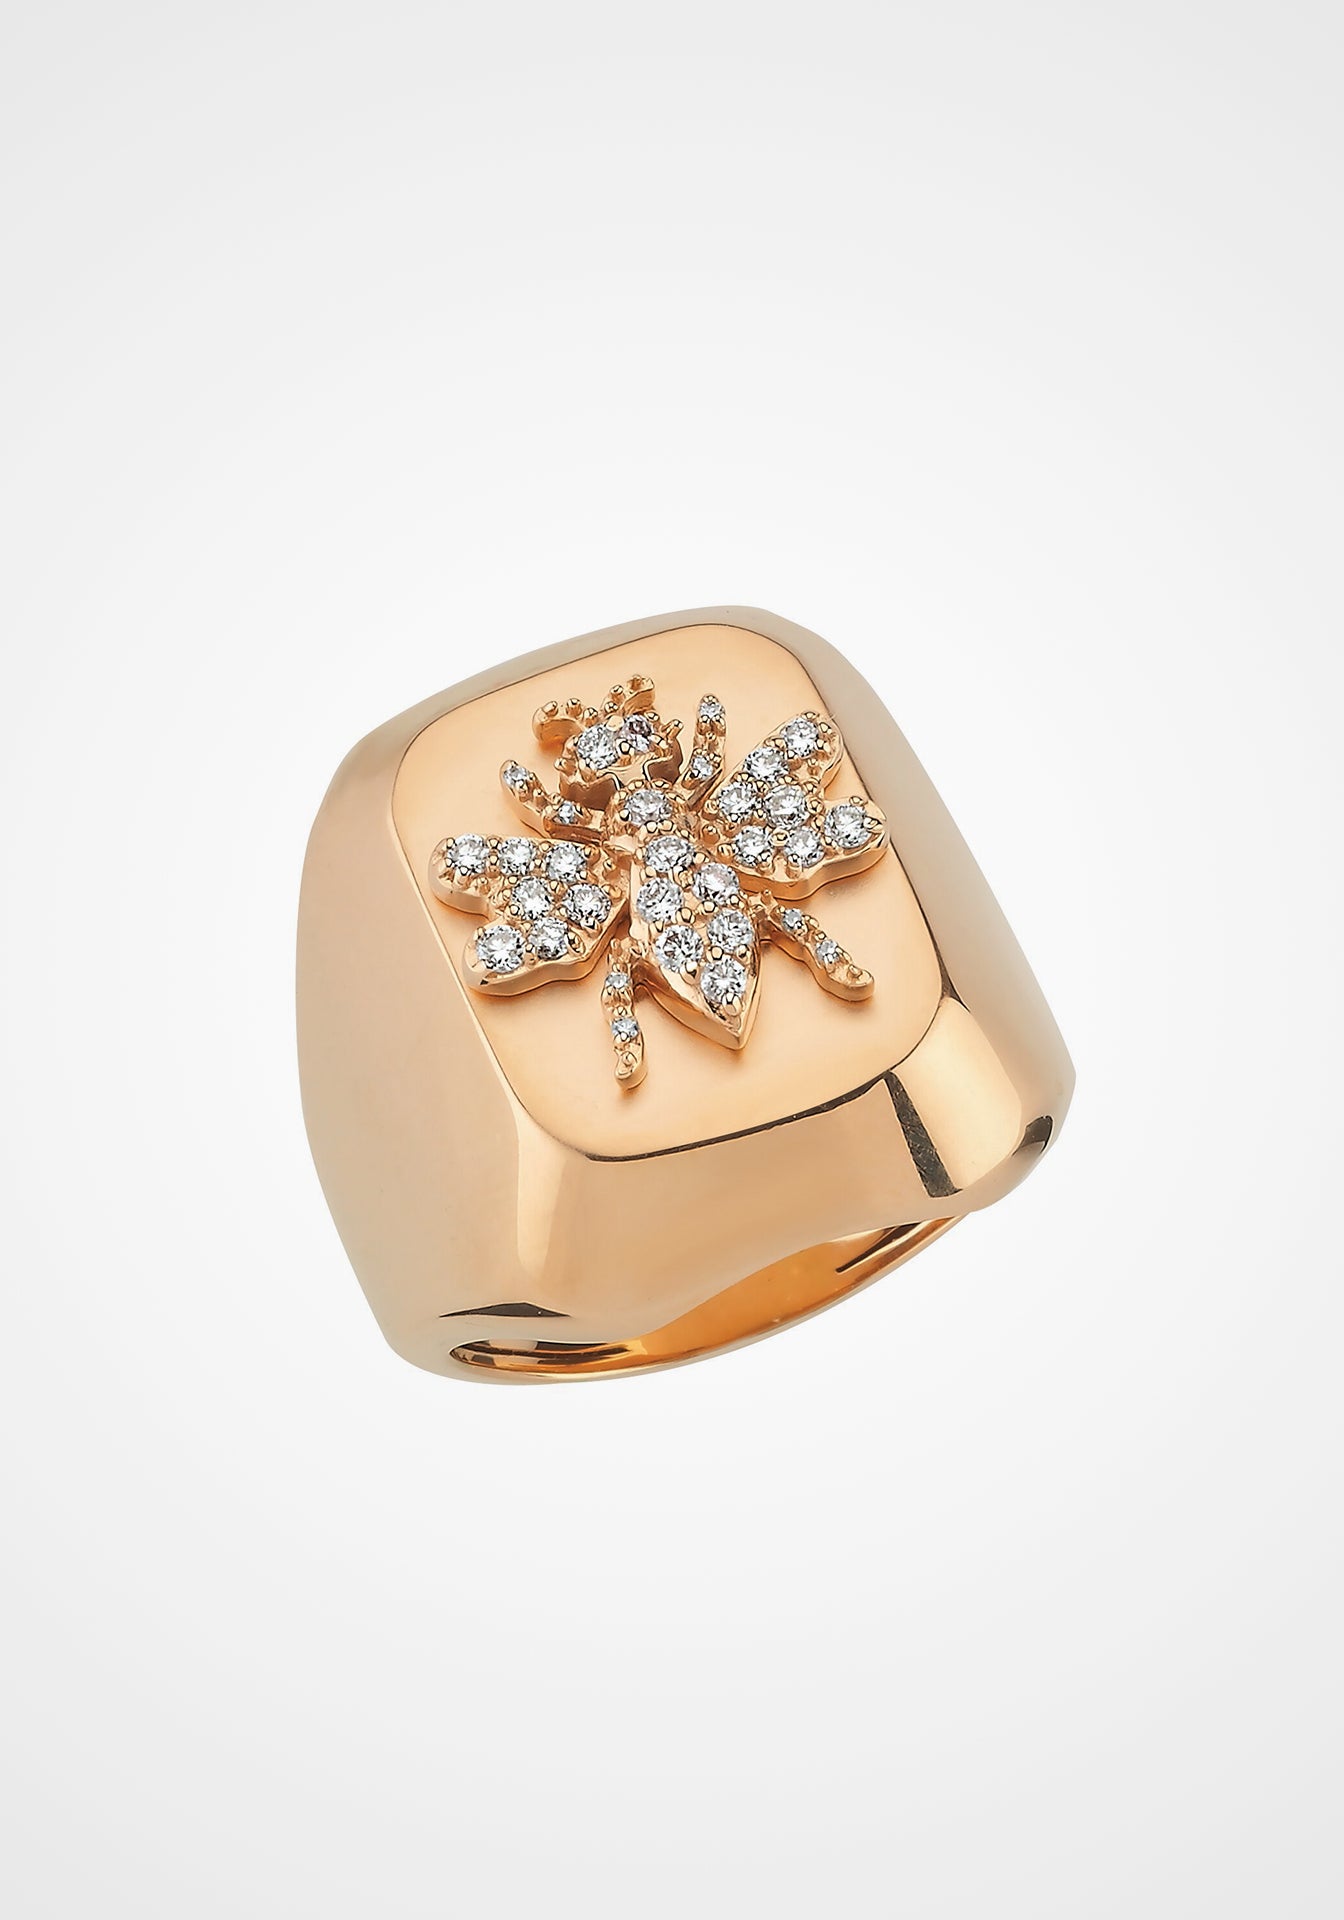 Queen Bee, 14K Rose Gold + Diamond Ring